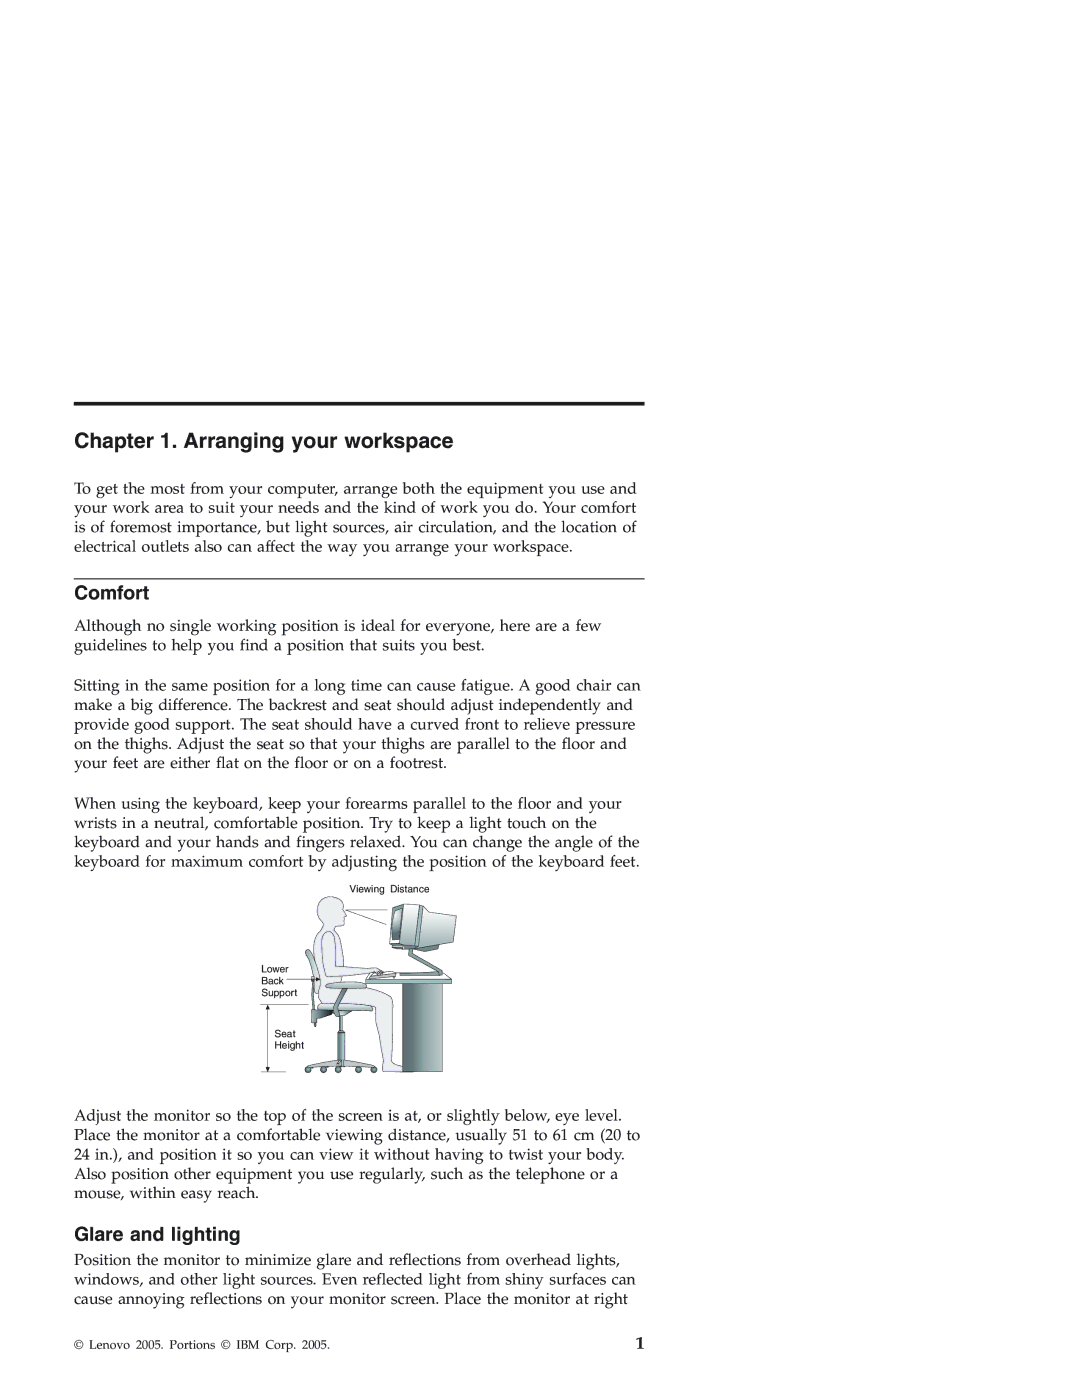 Lenovo 3000 J warranty Arranging your workspace, Comfort, Glare and lighting 